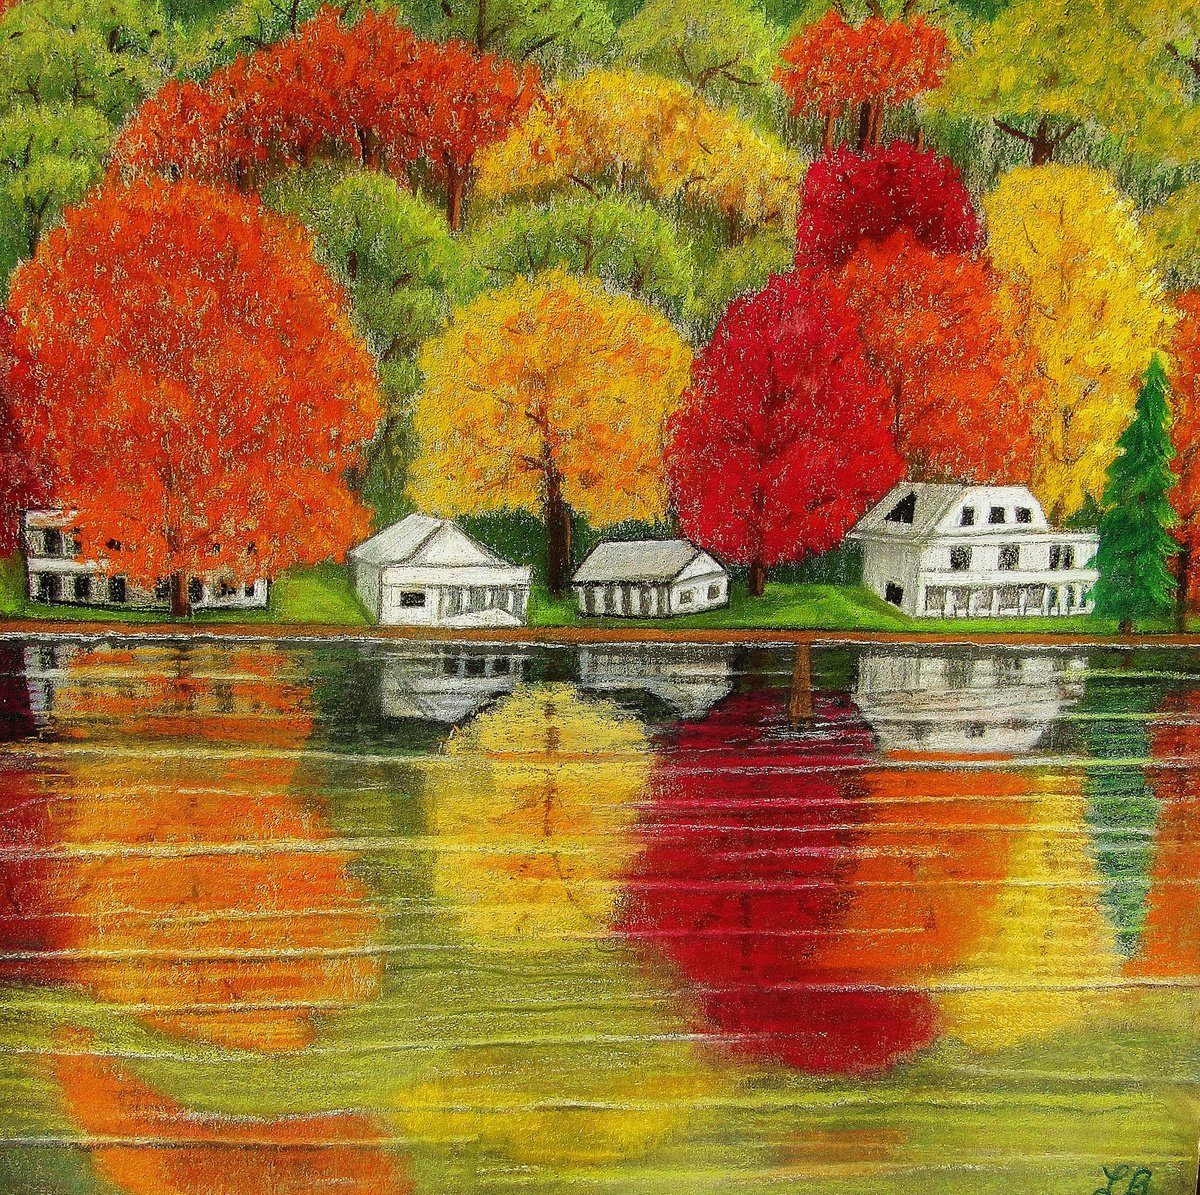 Autumn in New England by Linda Burnett